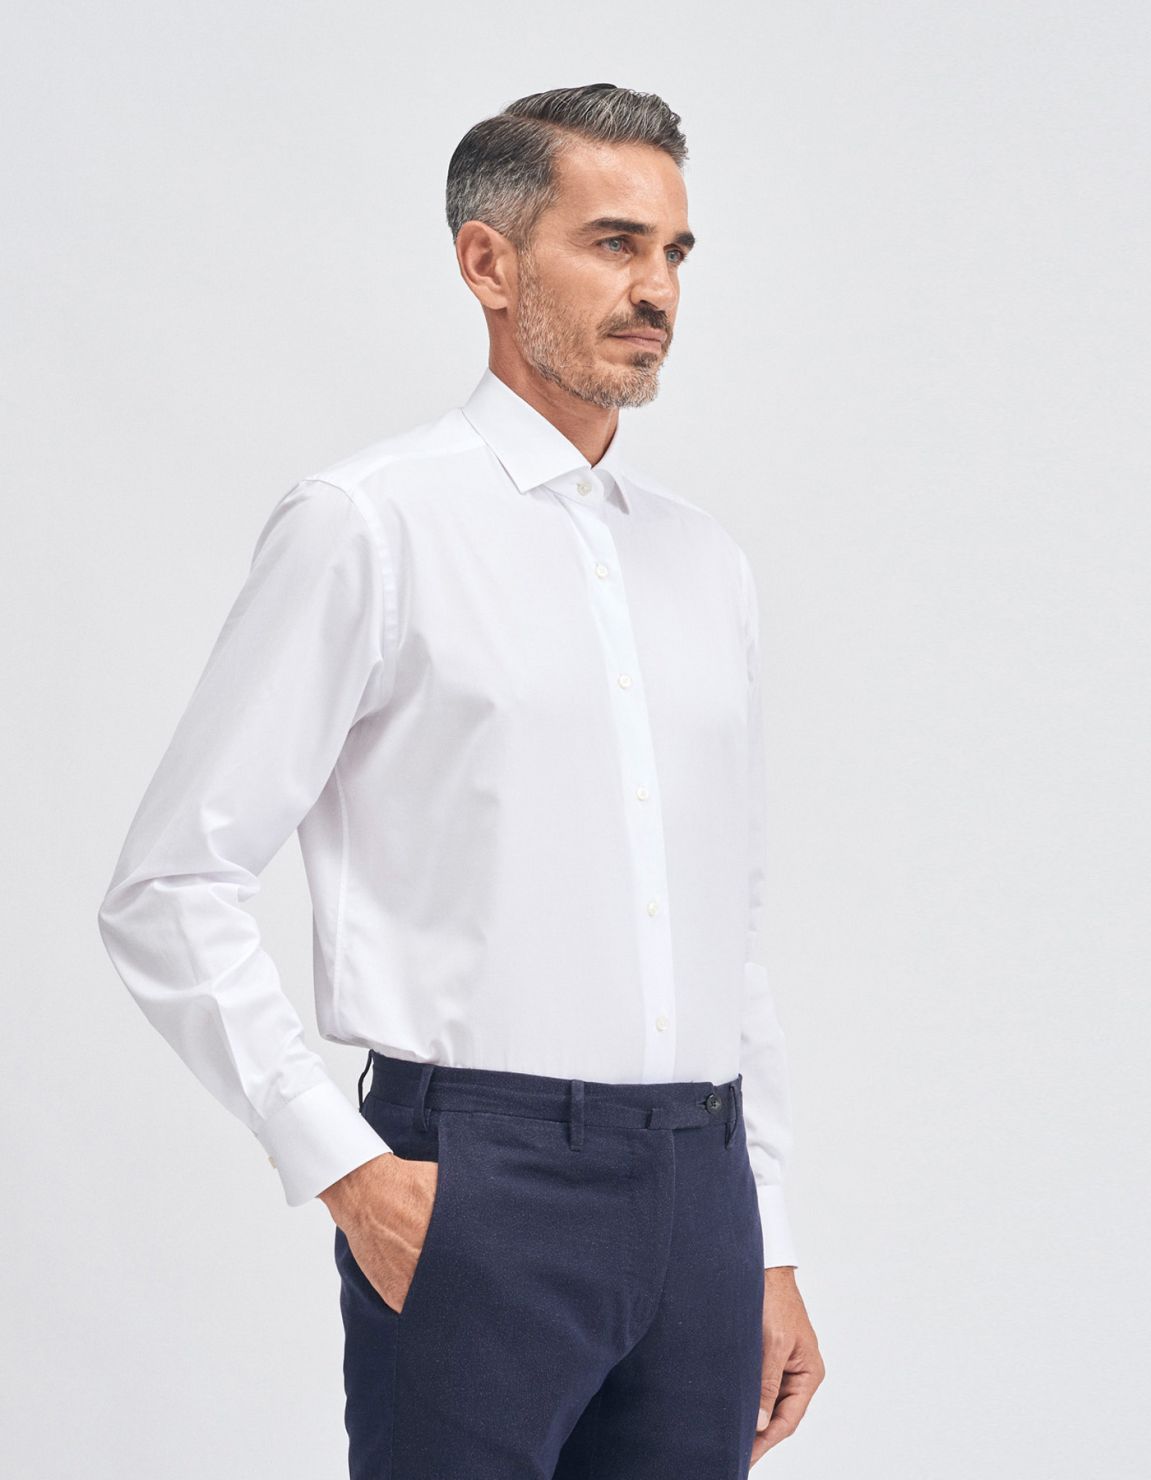 Shirt Collar small cutaway White Twill Evolution Classic Fit 1